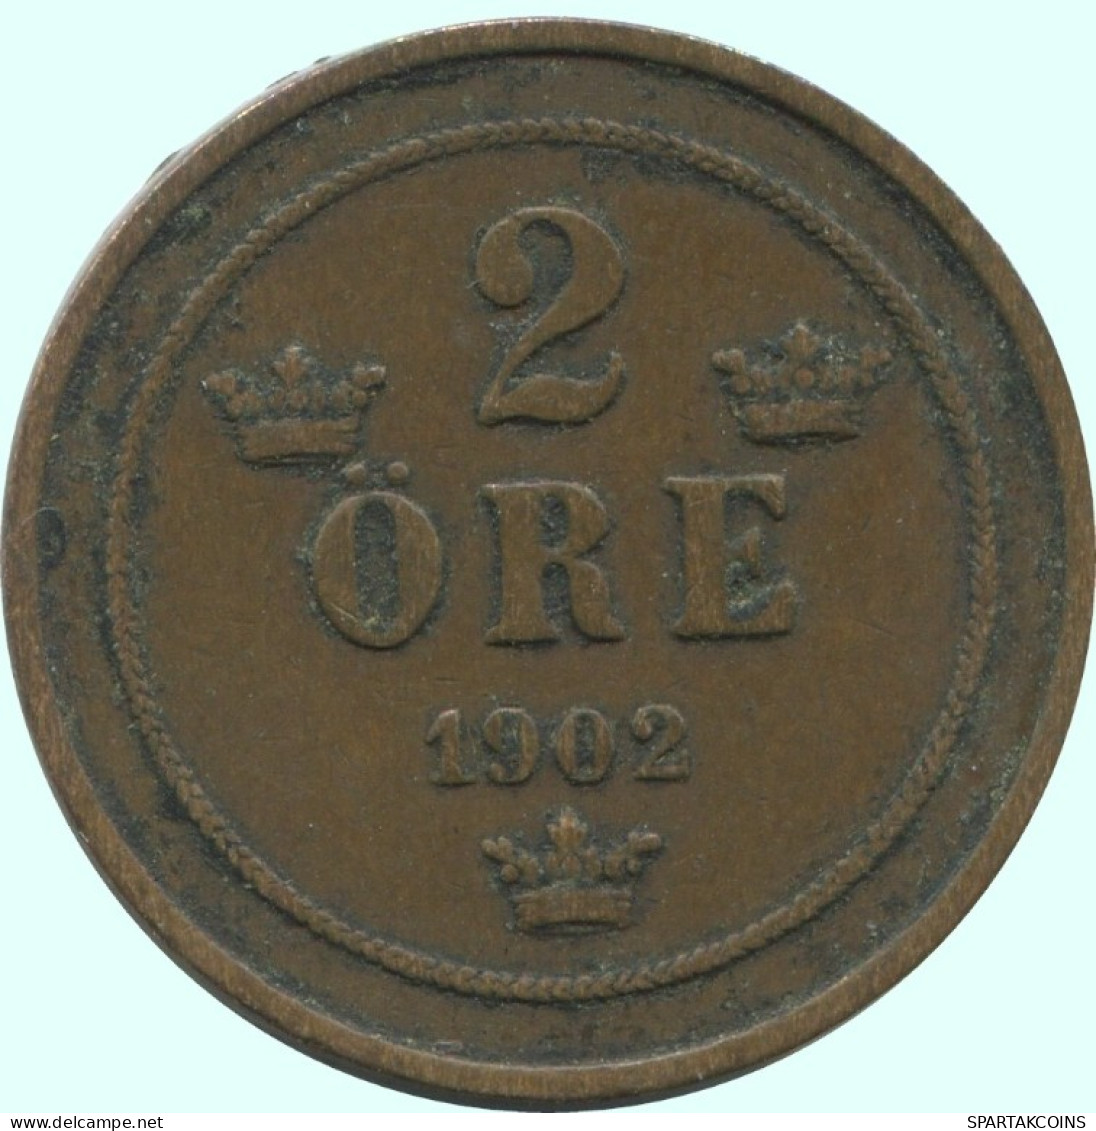 2 ORE 1902 SUÈDE SWEDEN Pièce #AC935.2.F.A - Suecia